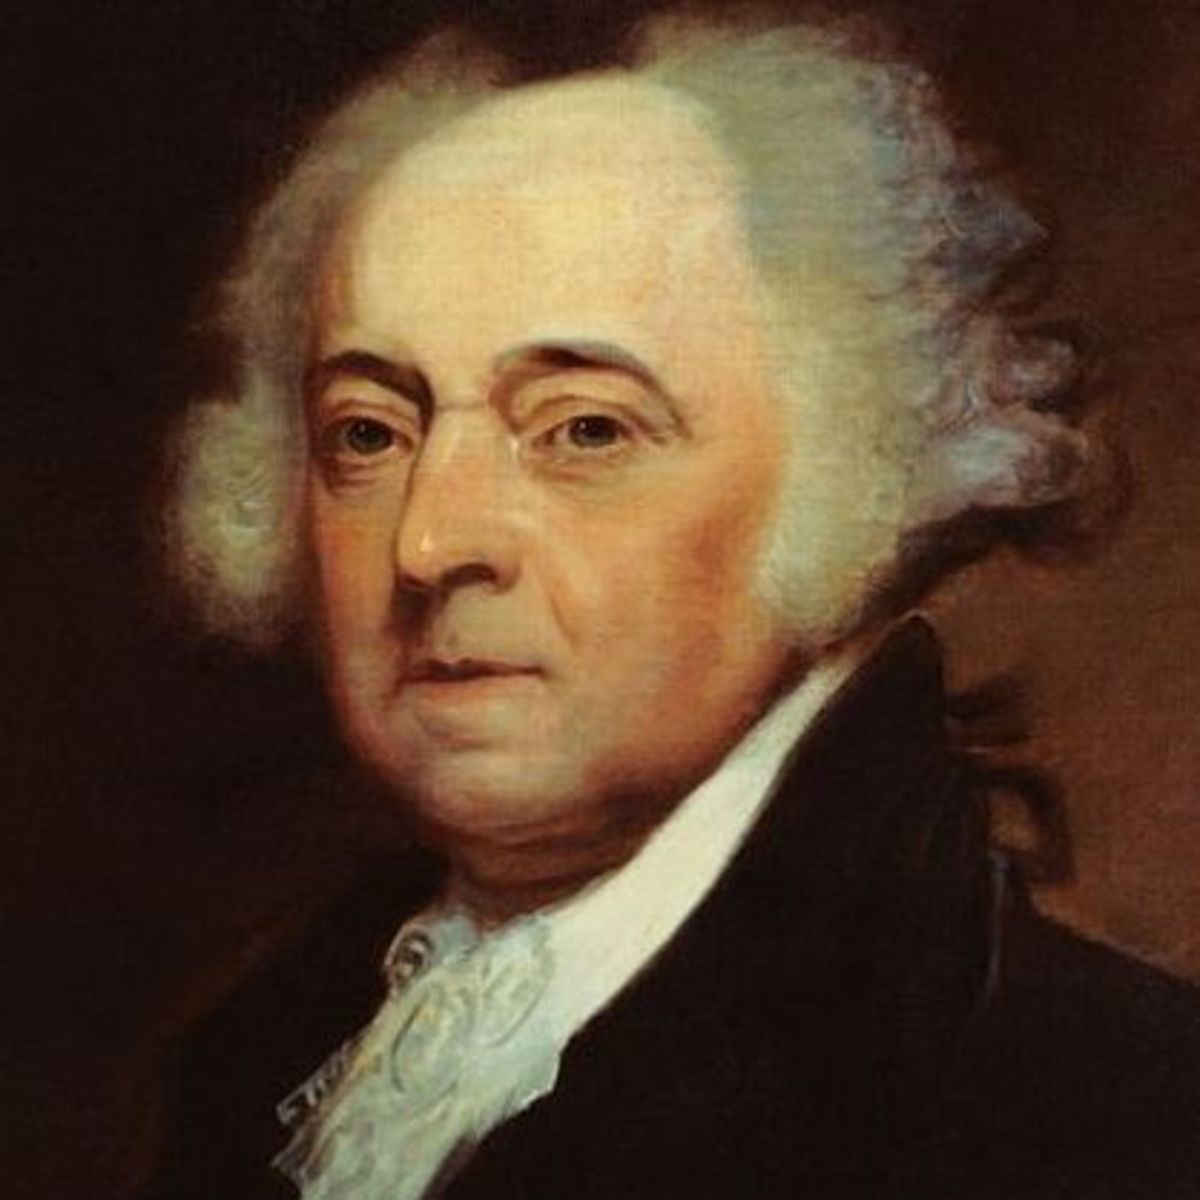 President John Adams's portrait by Asher B. Durand 